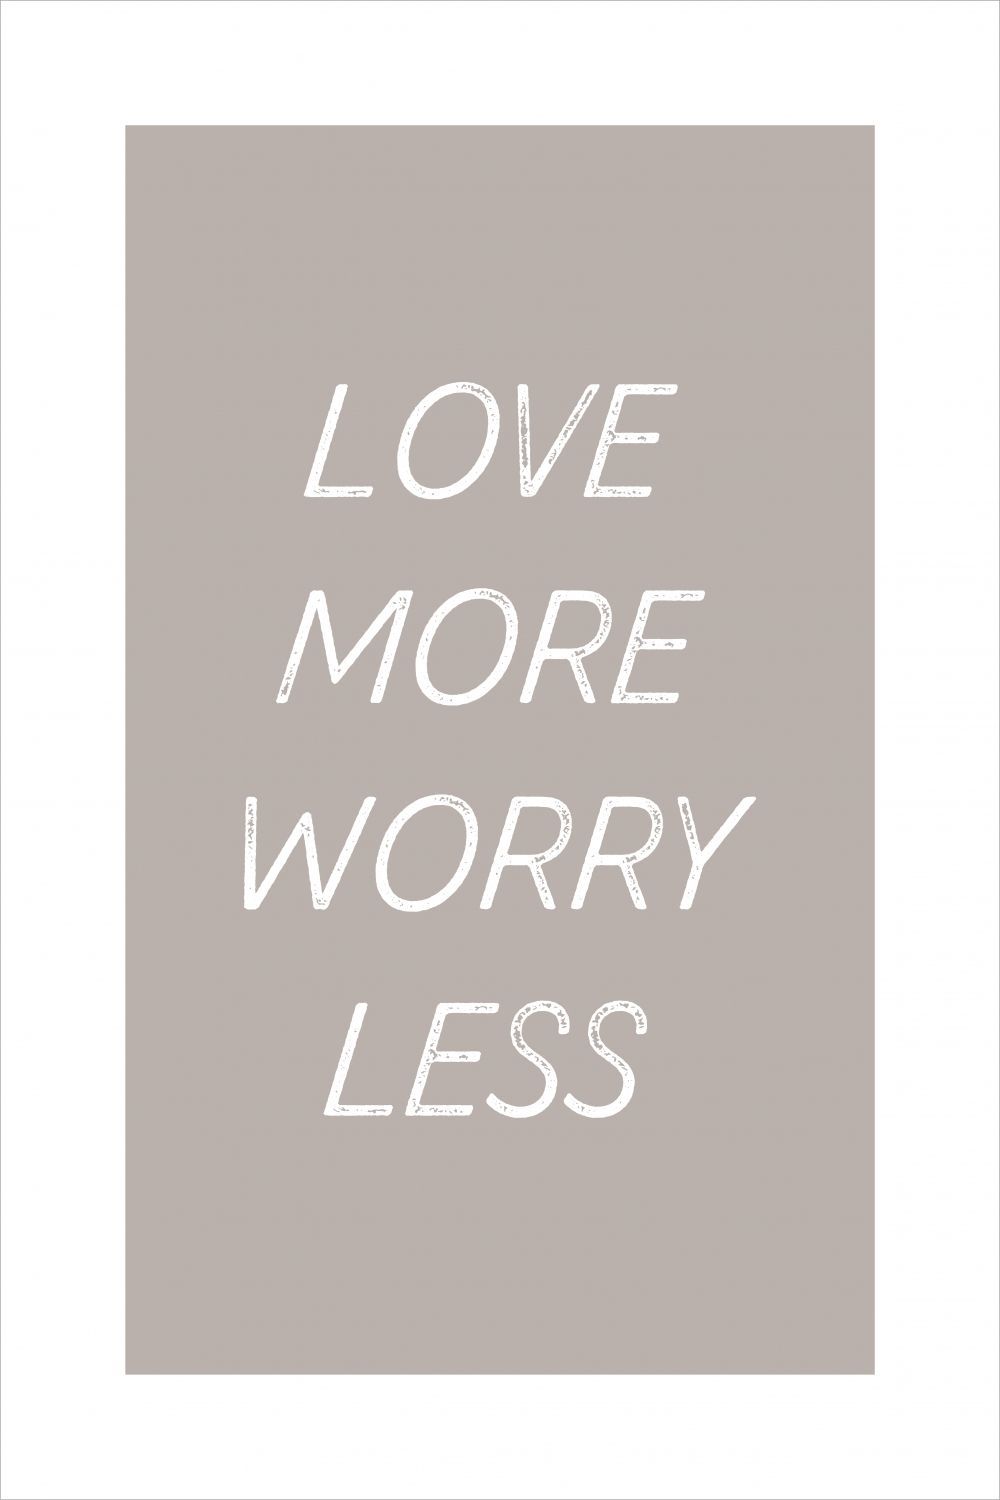 Постер "Love more"